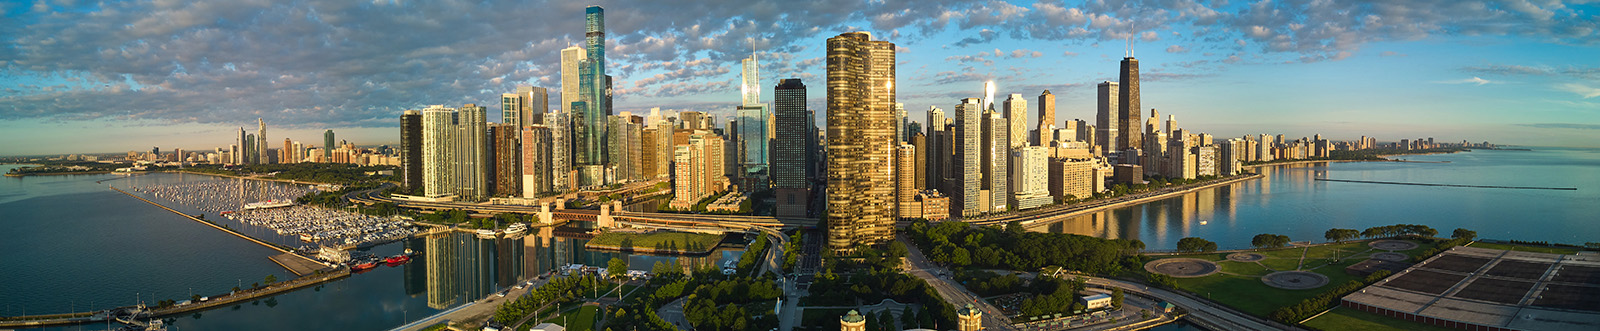 Chicago City skyline panorama